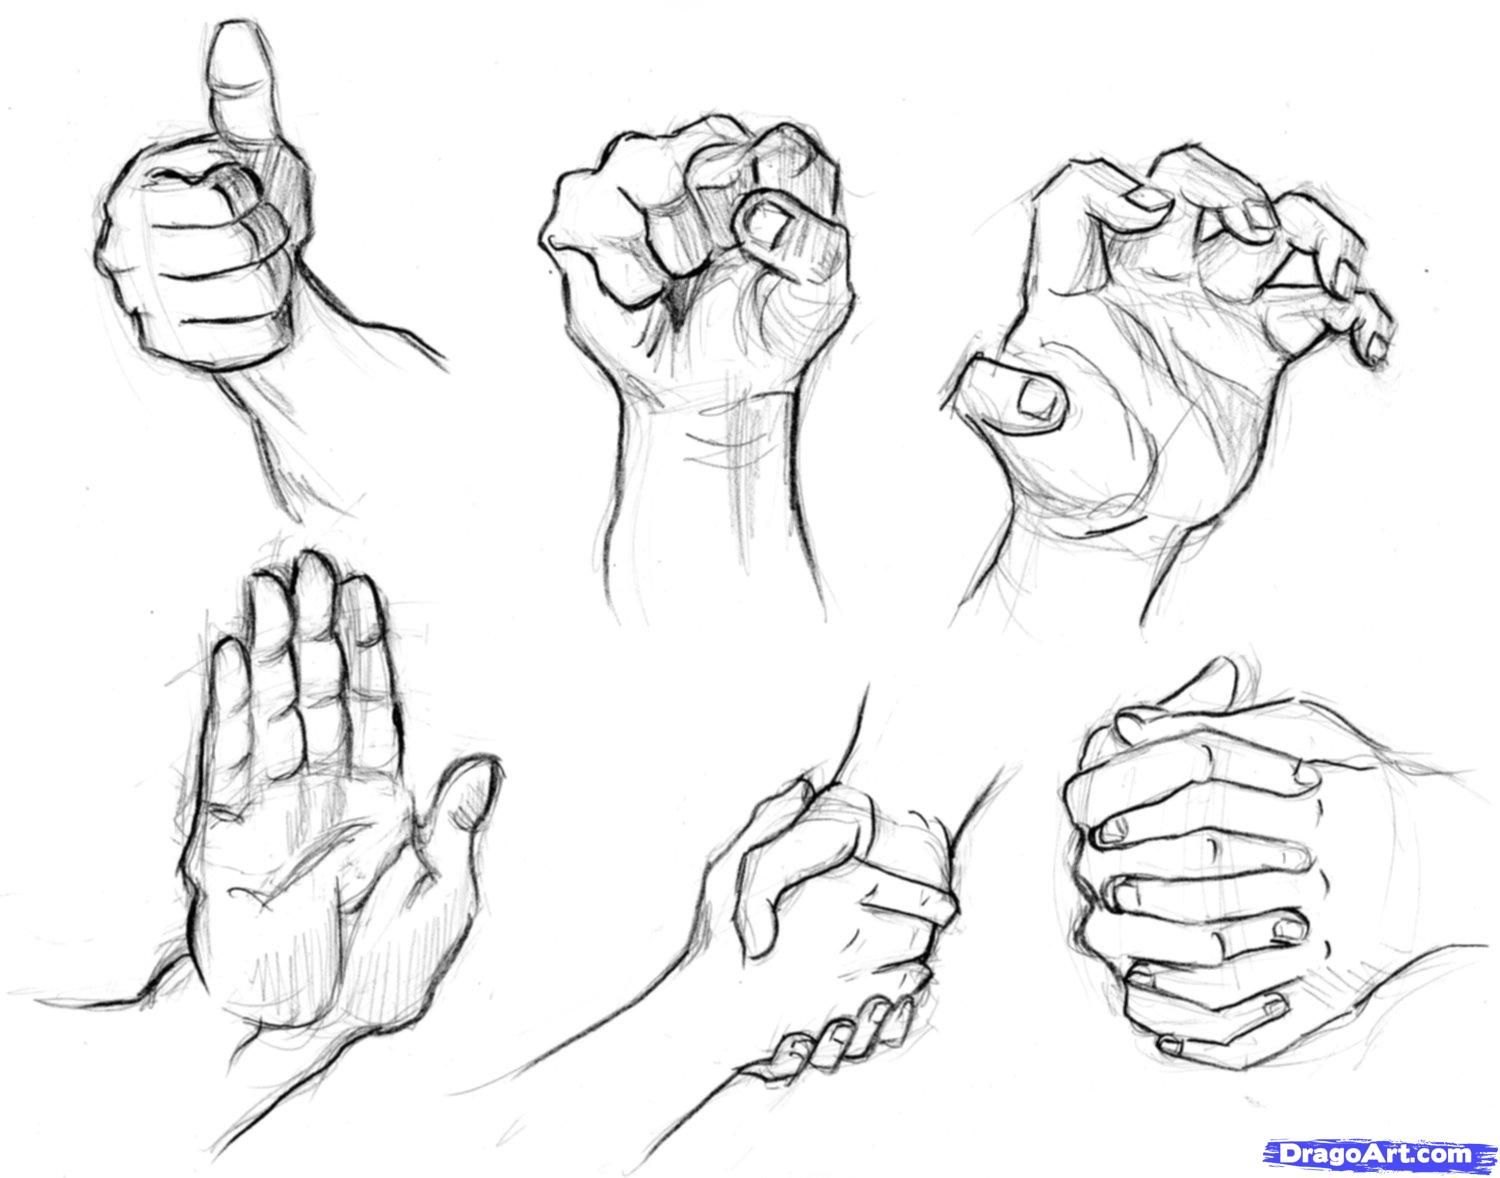 Руки в разных ракурсах